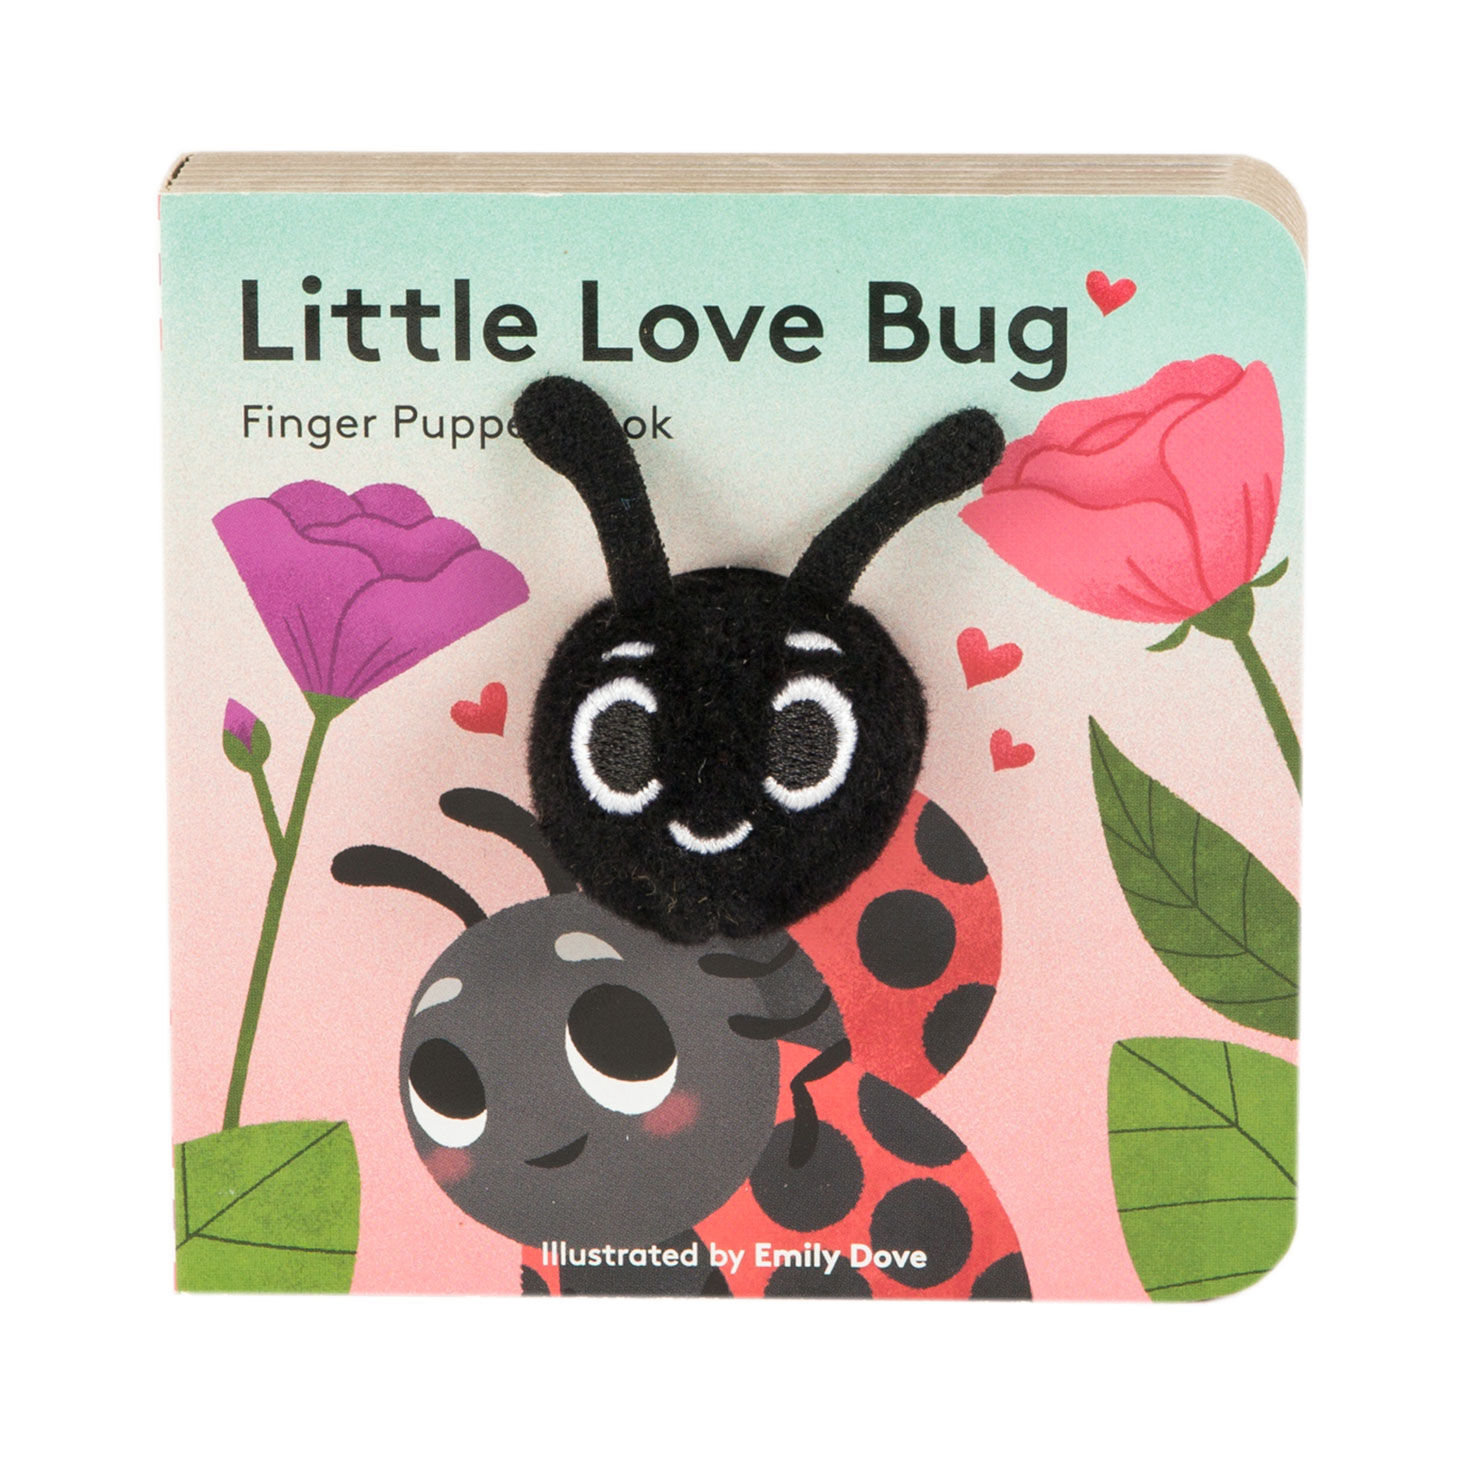 Little Love Bug Finger Puppet Board Book for only USD 7.99 | Hallmark